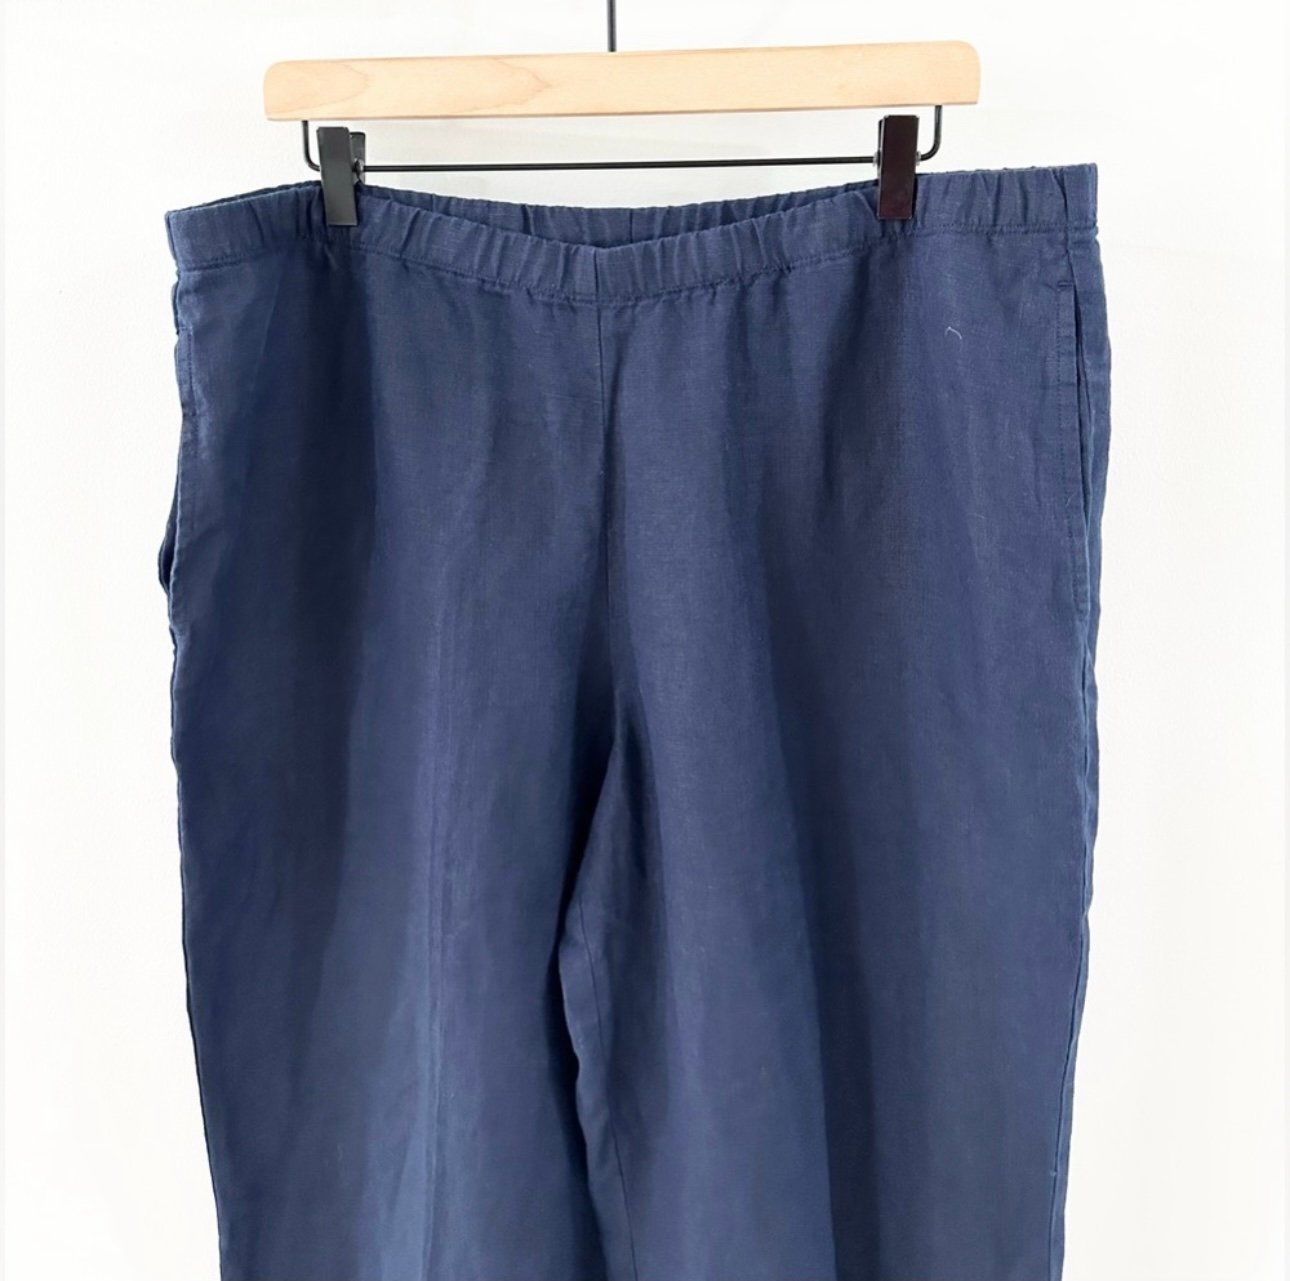 Fashion J. Jill Love Linen Pull On Linen Pants Blue Size Large jQI72iTAw Store Online